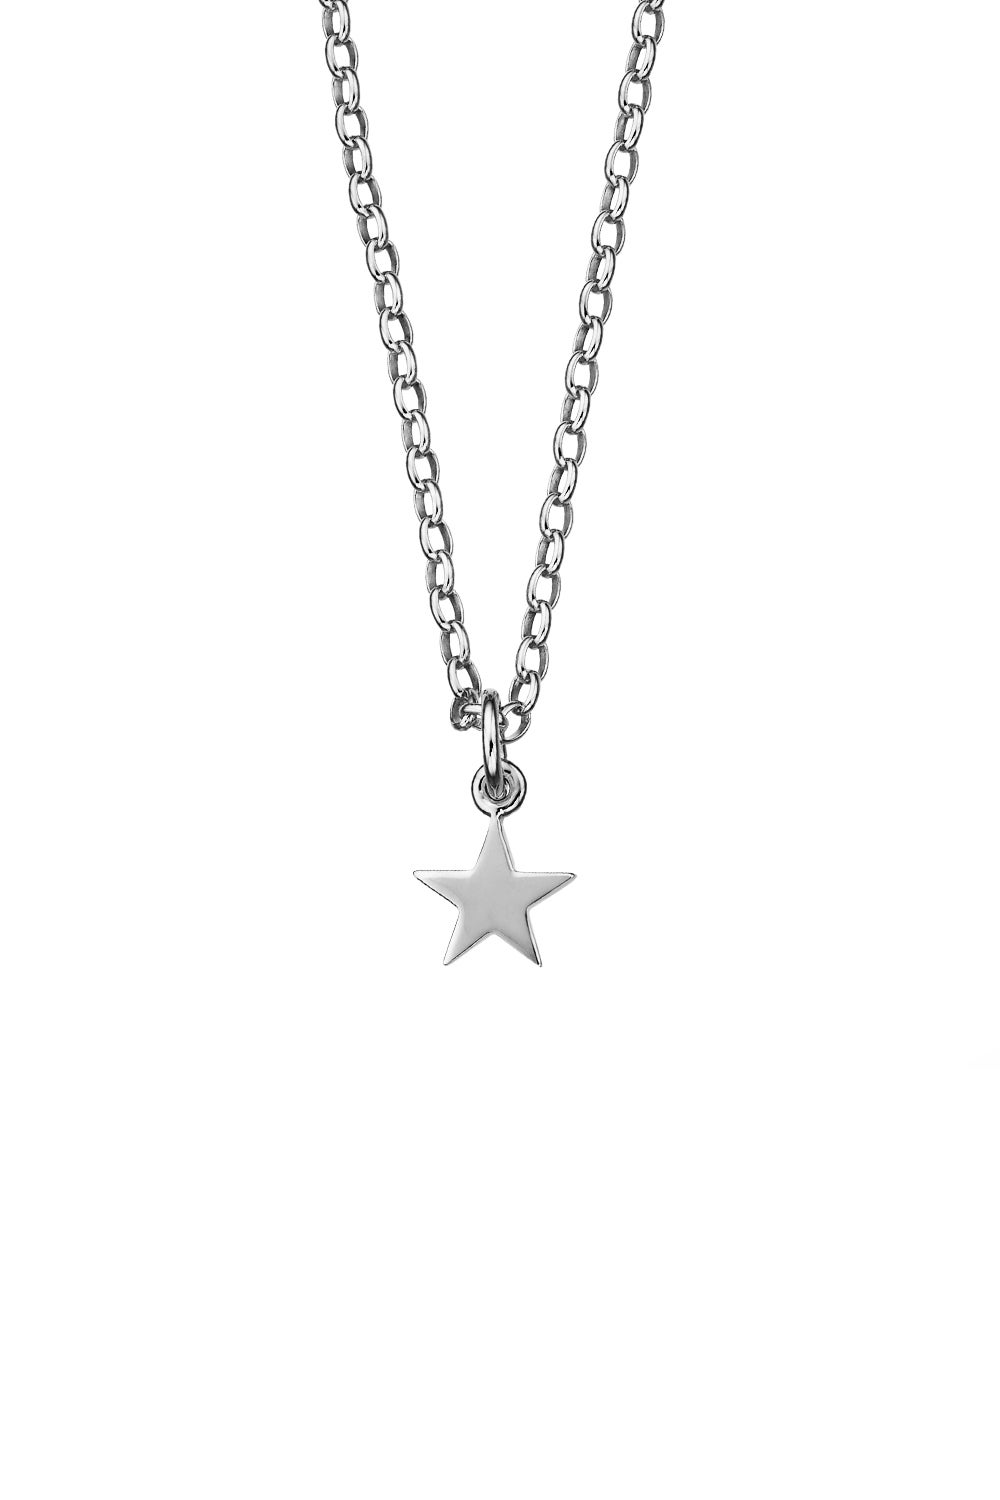 Diamond Star Pendant Necklace, Gold or Silver | Jewelry by Johan - Jewelry  by Johan